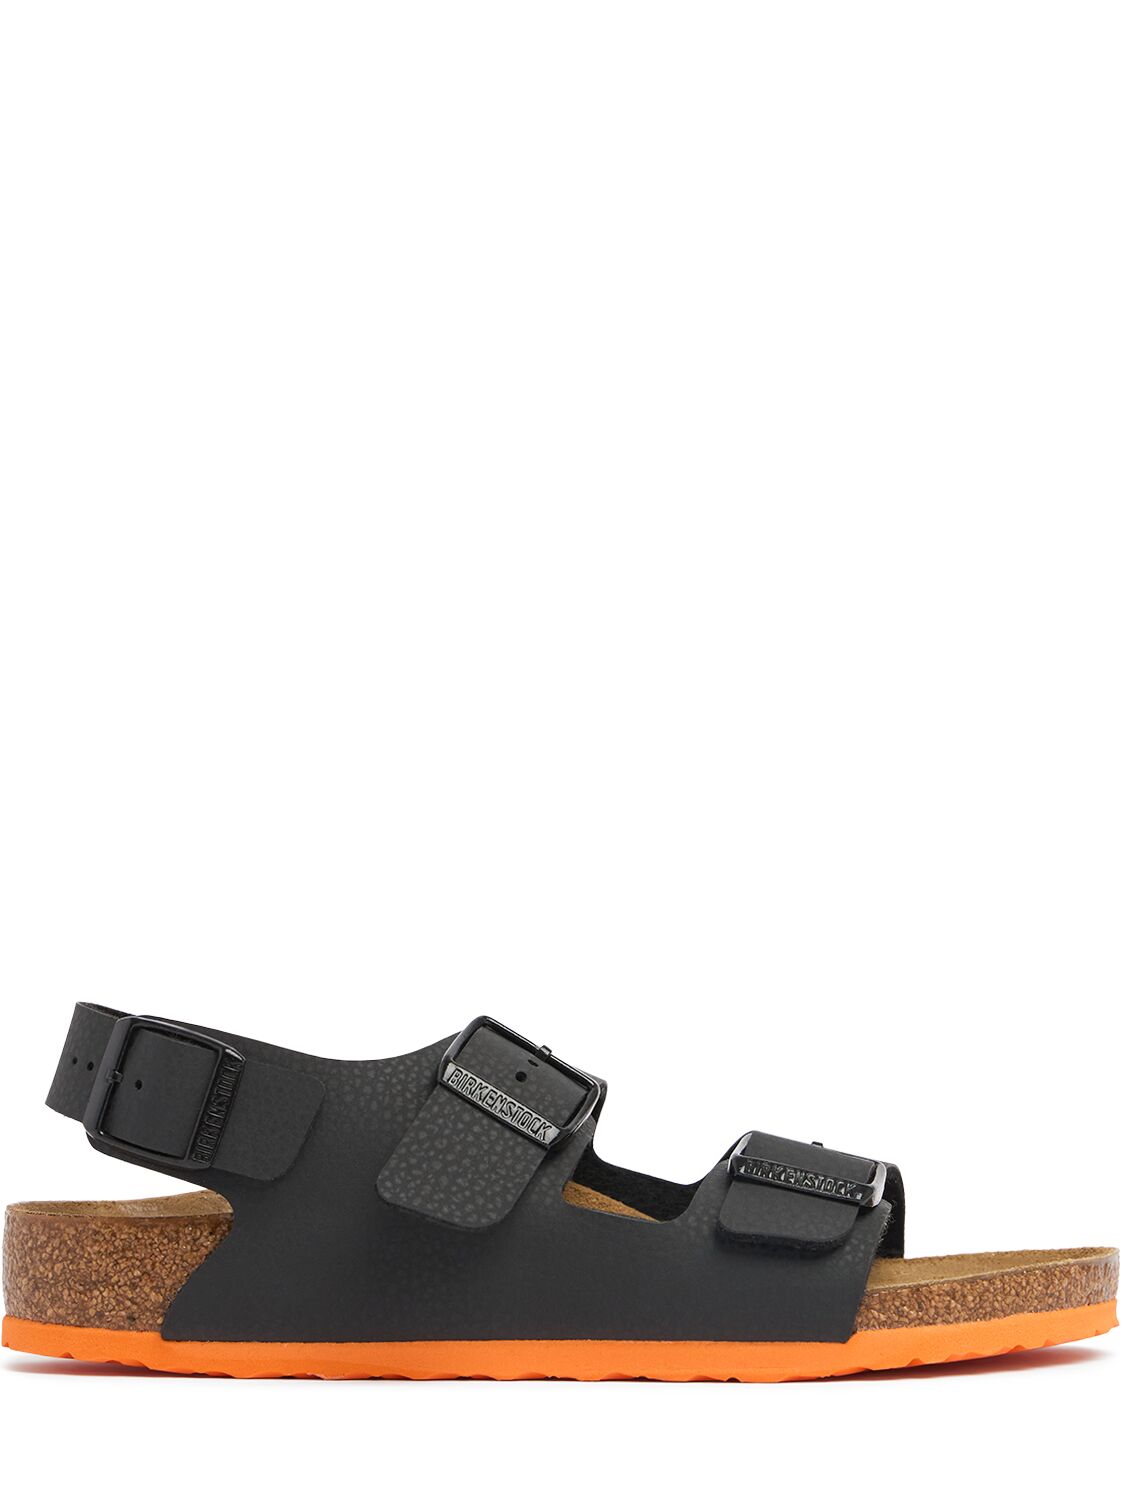 Birkenstock Milano Faux Leather Sandals In Black